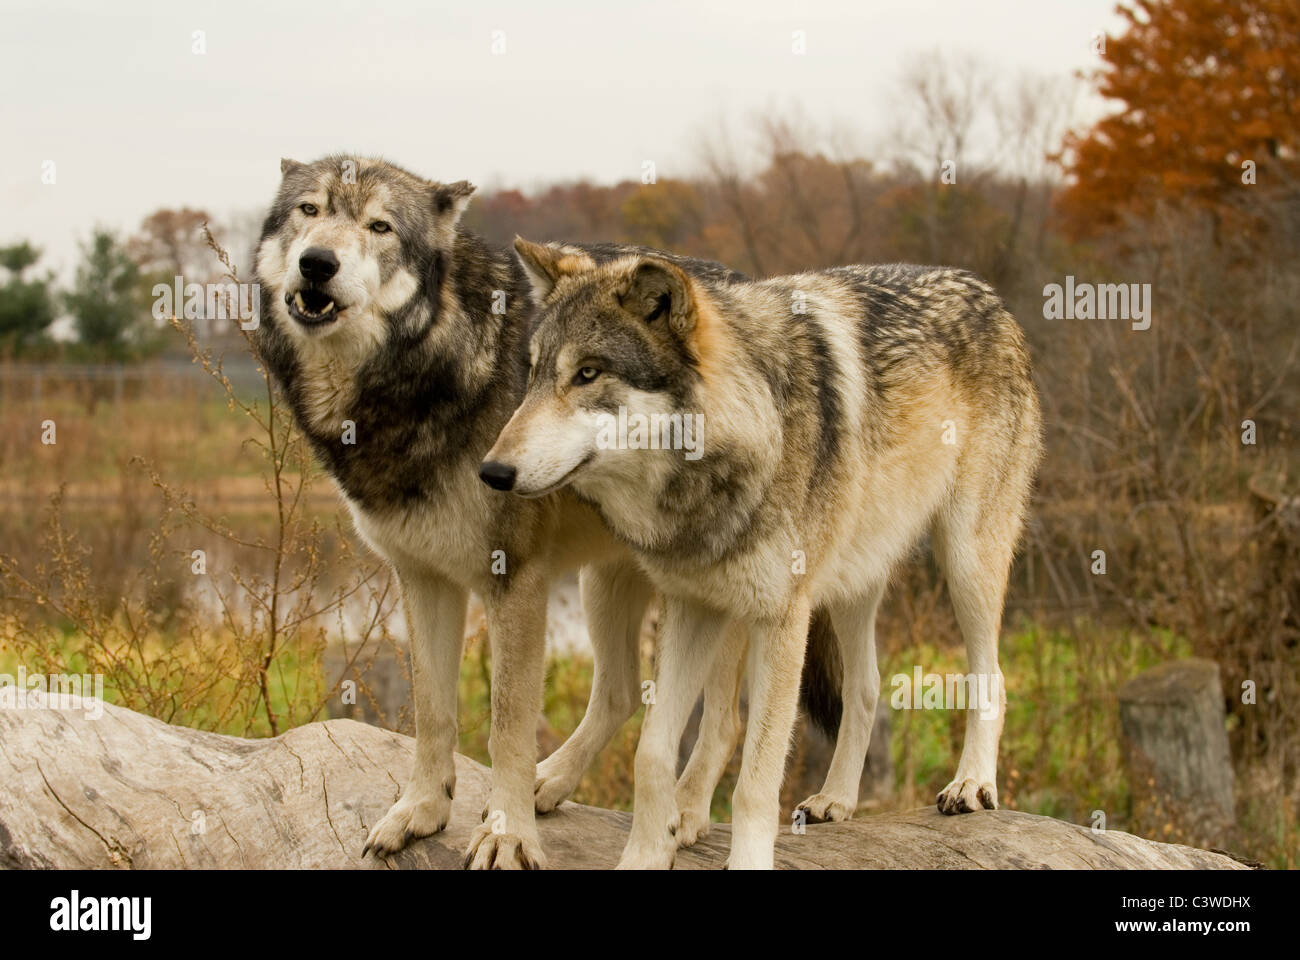 Usted distraer a él, voy a agarrar la cámara--Los Lobos Grises (Canis lupus) Foto de stock